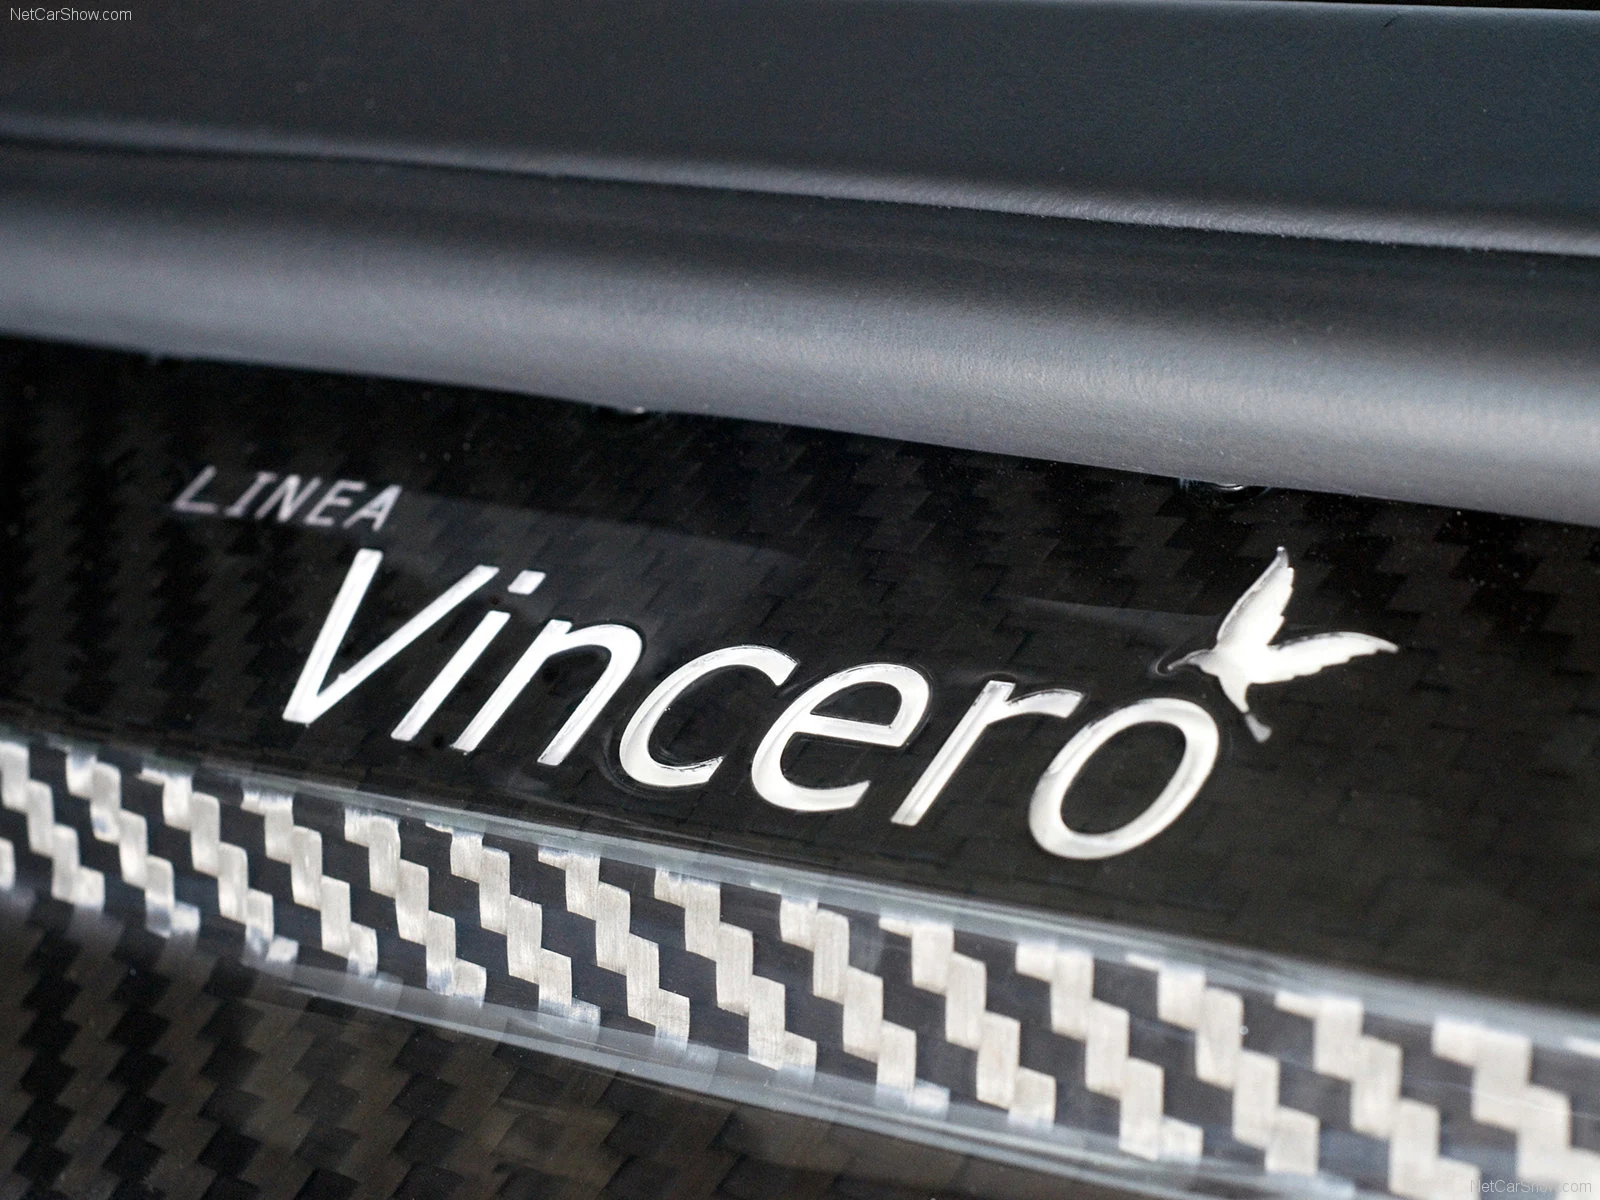 Hình ảnh siêu xe Mansory Bugatti Veyron Linea Vincero 2009 & nội ngoại thất